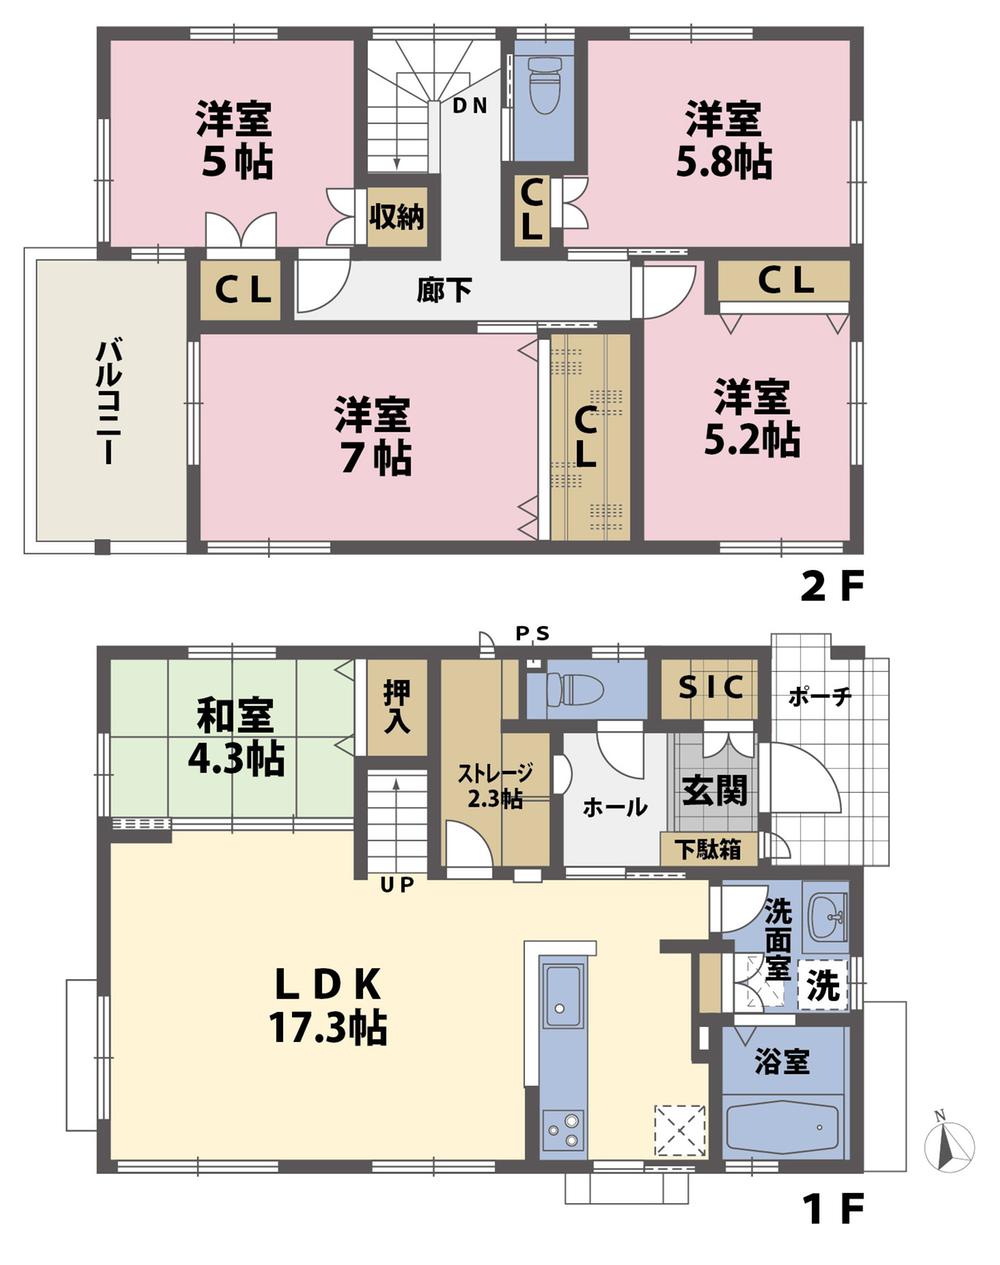 Floor plan. (No.2), Price 38,980,000 yen, 5LDK, Land area 118.02 sq m , Building area 109.36 sq m